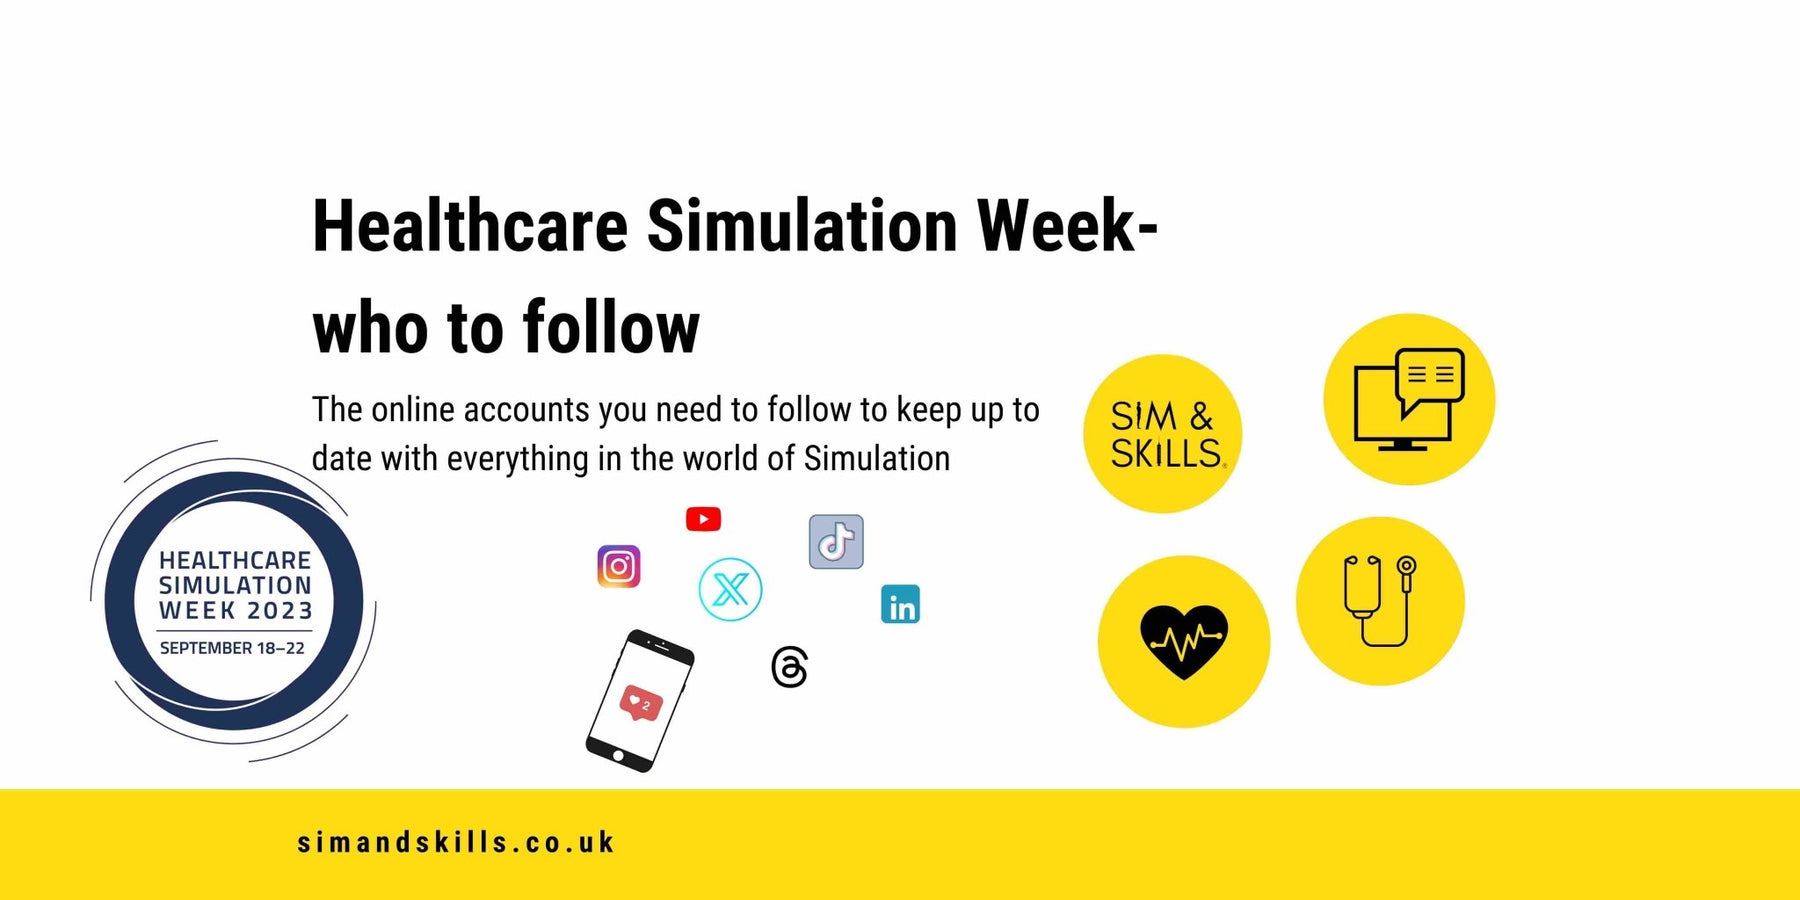 The Top 5 Healthcare Simulation accounts to follow - Sim & Skills